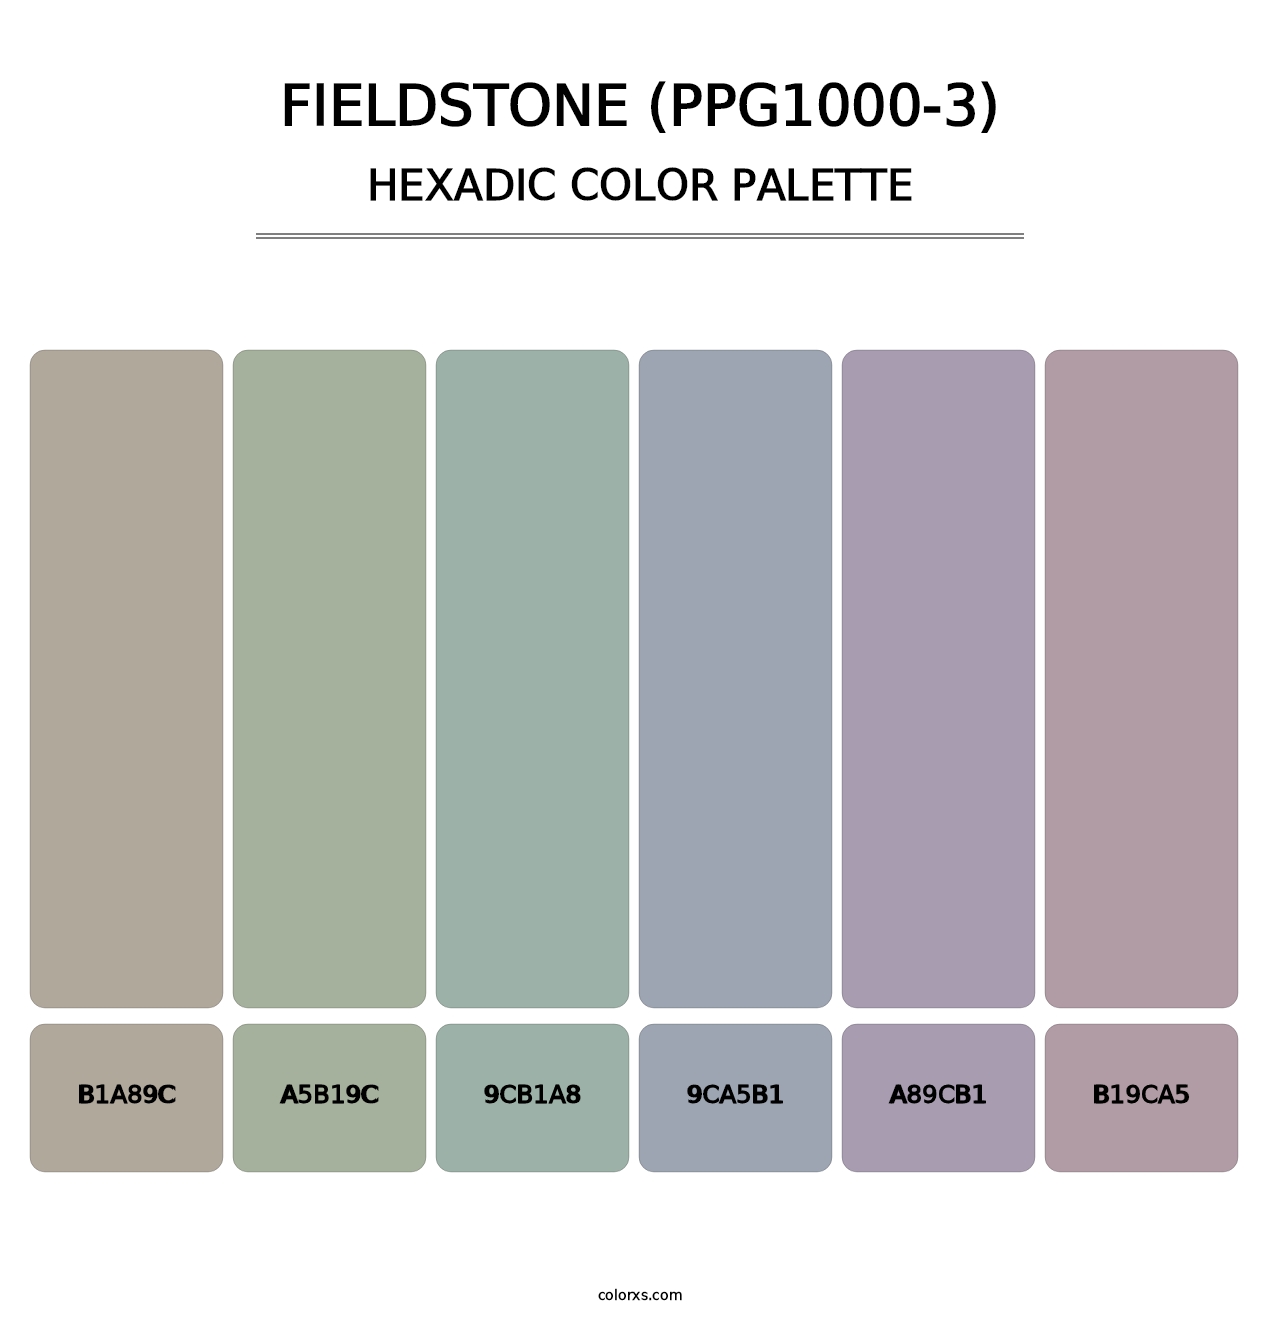 Fieldstone (PPG1000-3) - Hexadic Color Palette